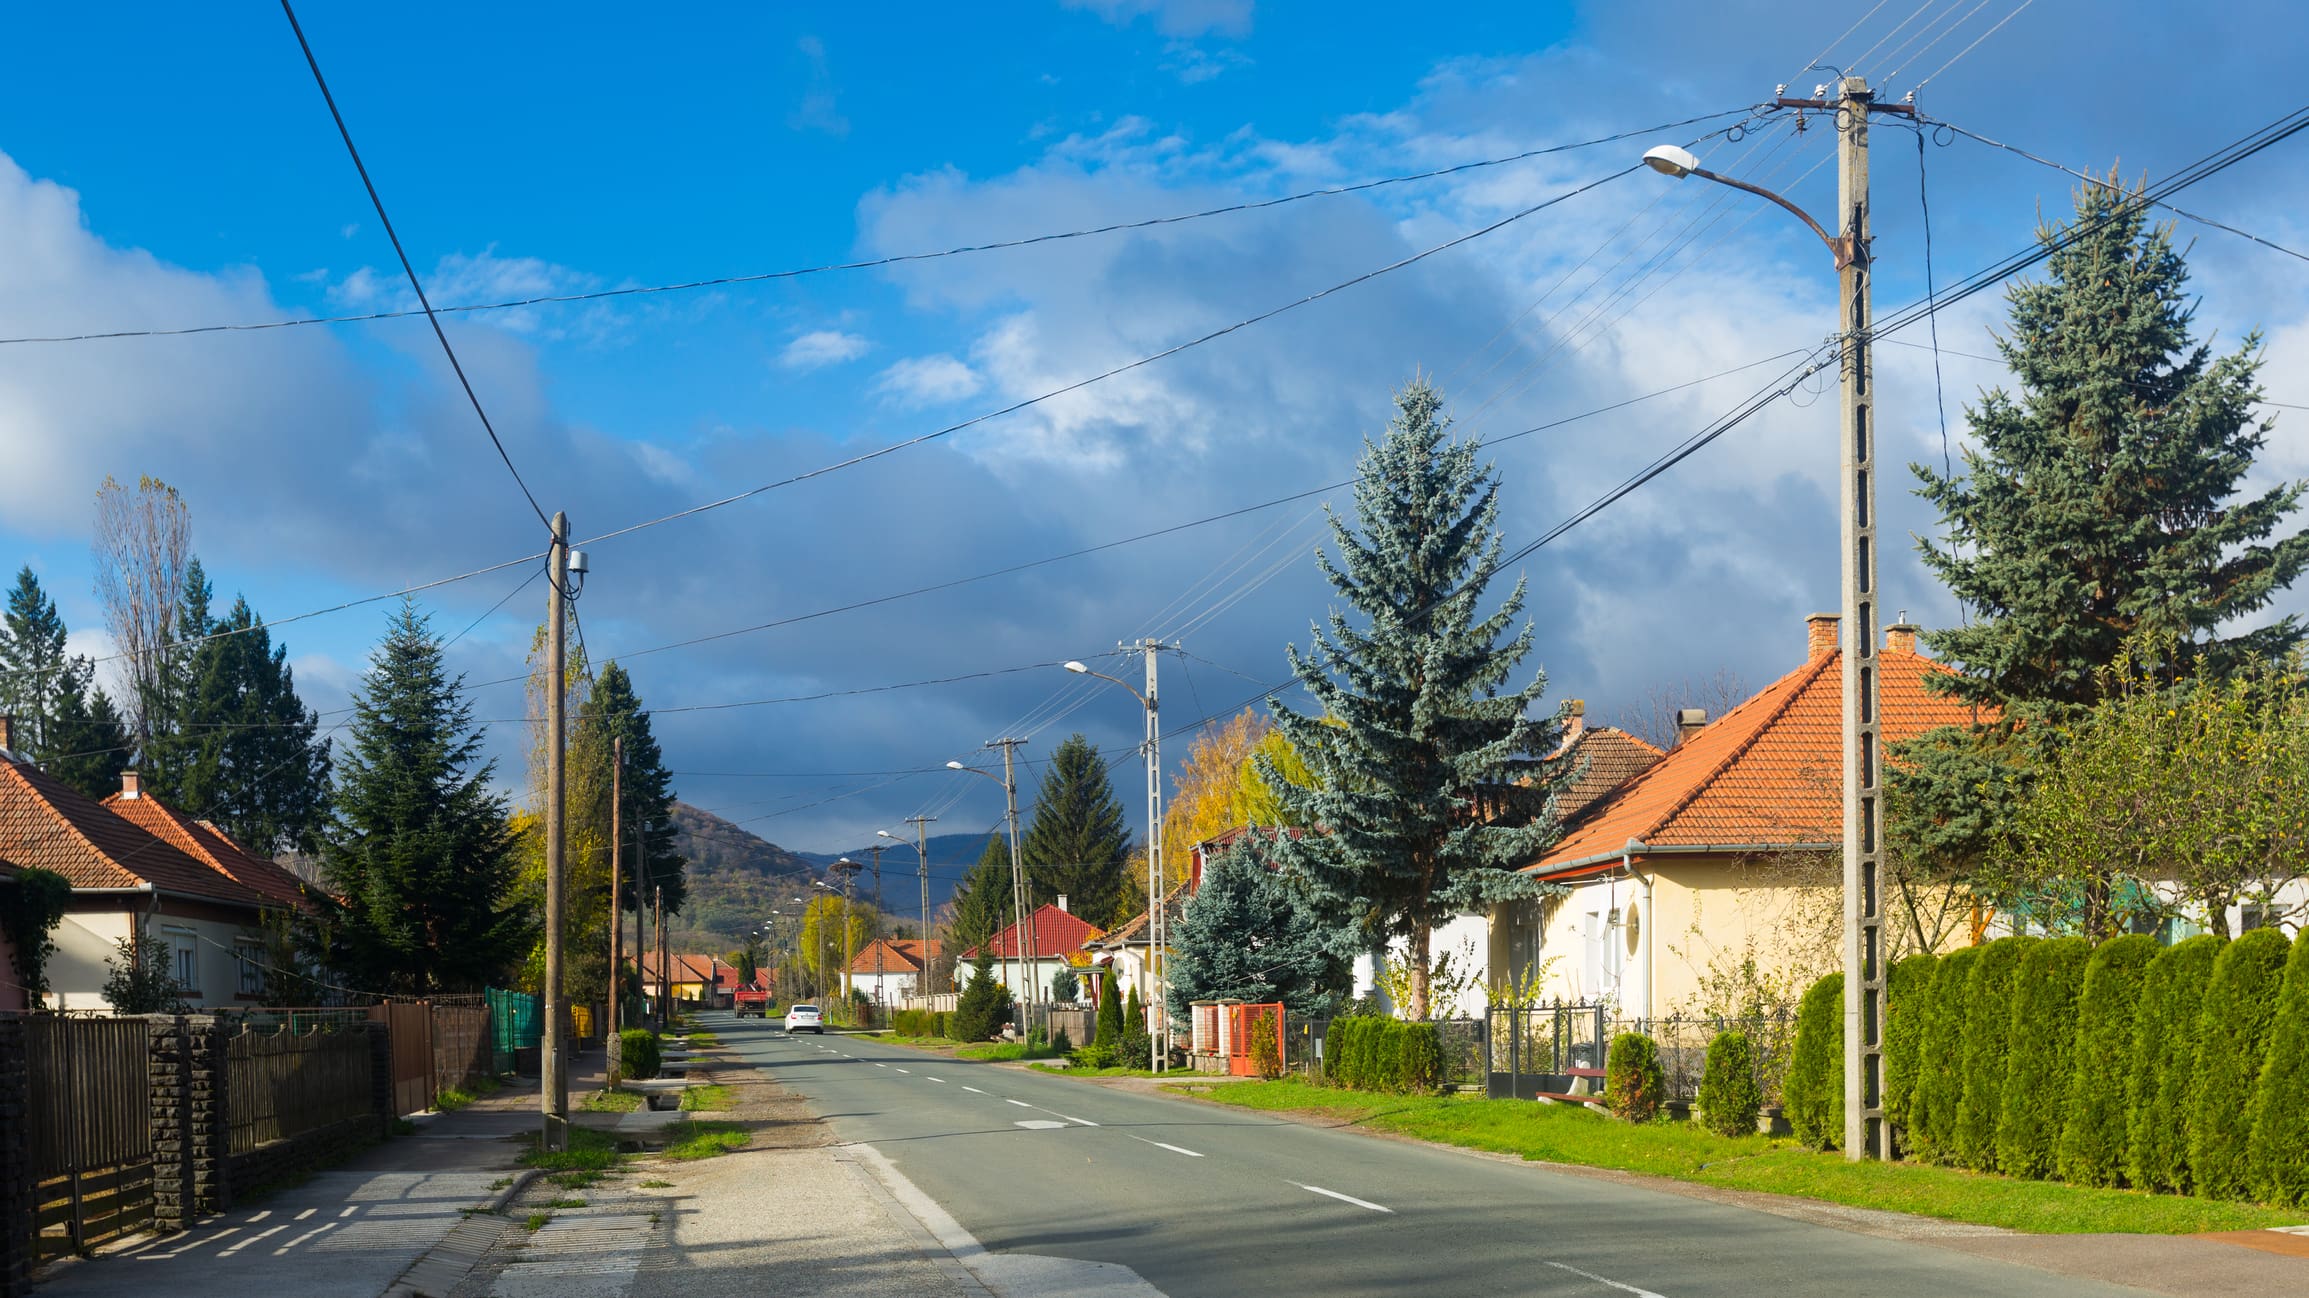 Magyar falu látképe a falusi CSOK apropóján.